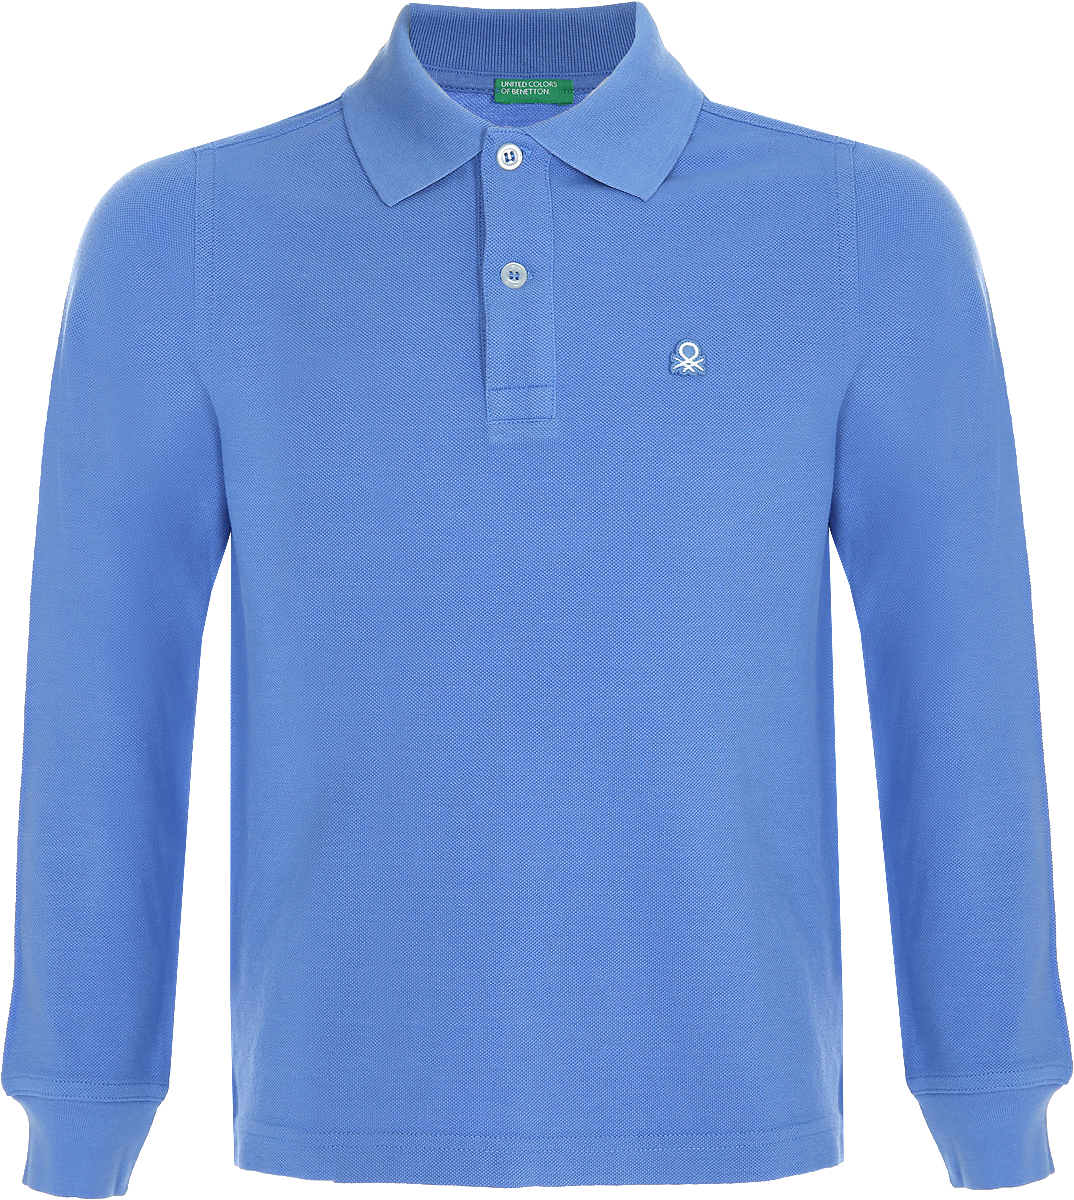 Кофта для мальчика United Colors of Benetton, цвет: голубой. 3089C3090_26R. Размер 110